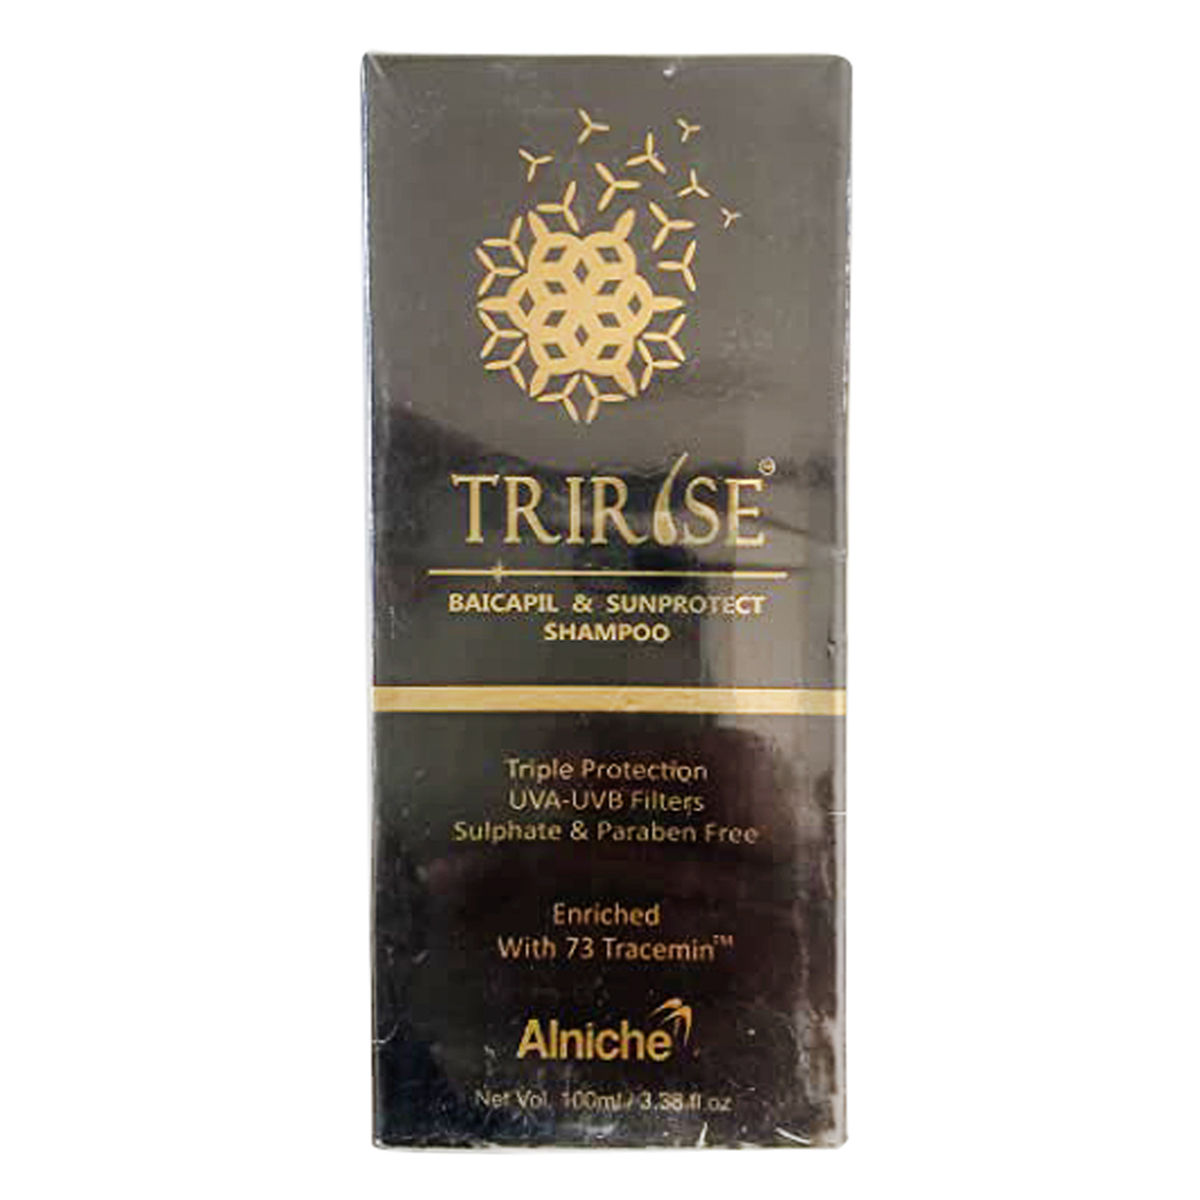 Buy Tririse Shampoo, 100 ml Online